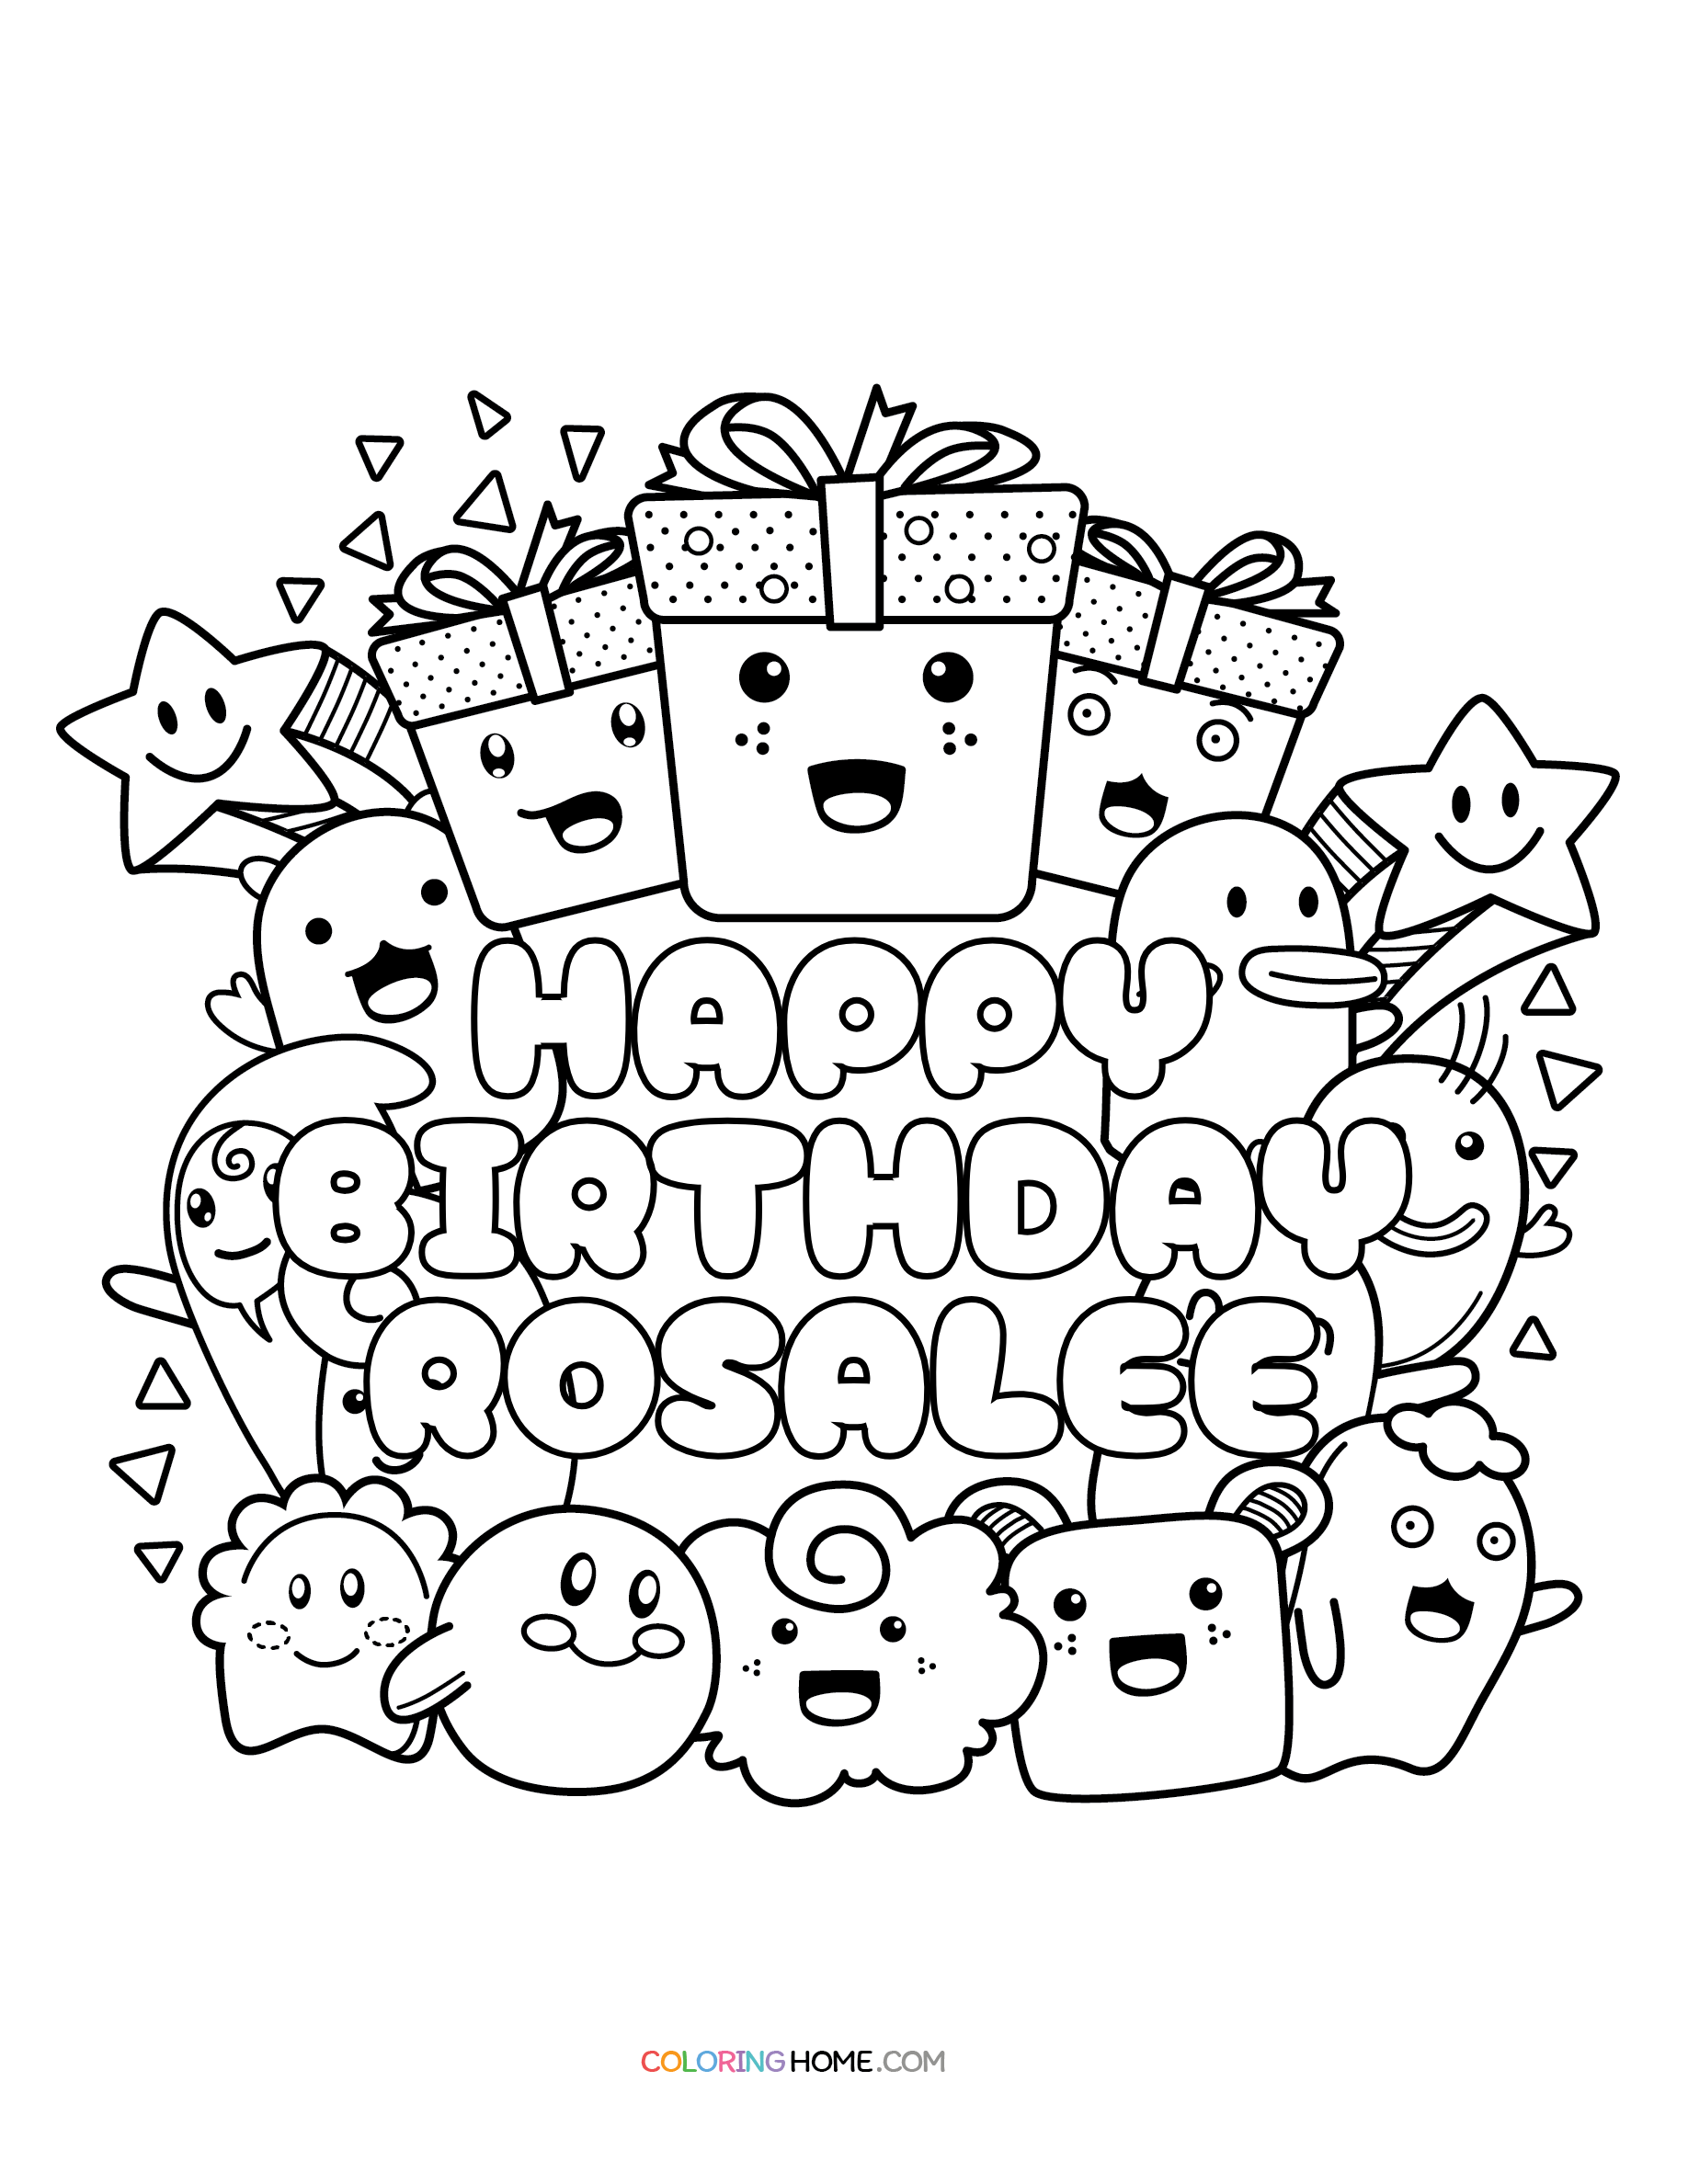 Happy Birthday Rosalee coloring page